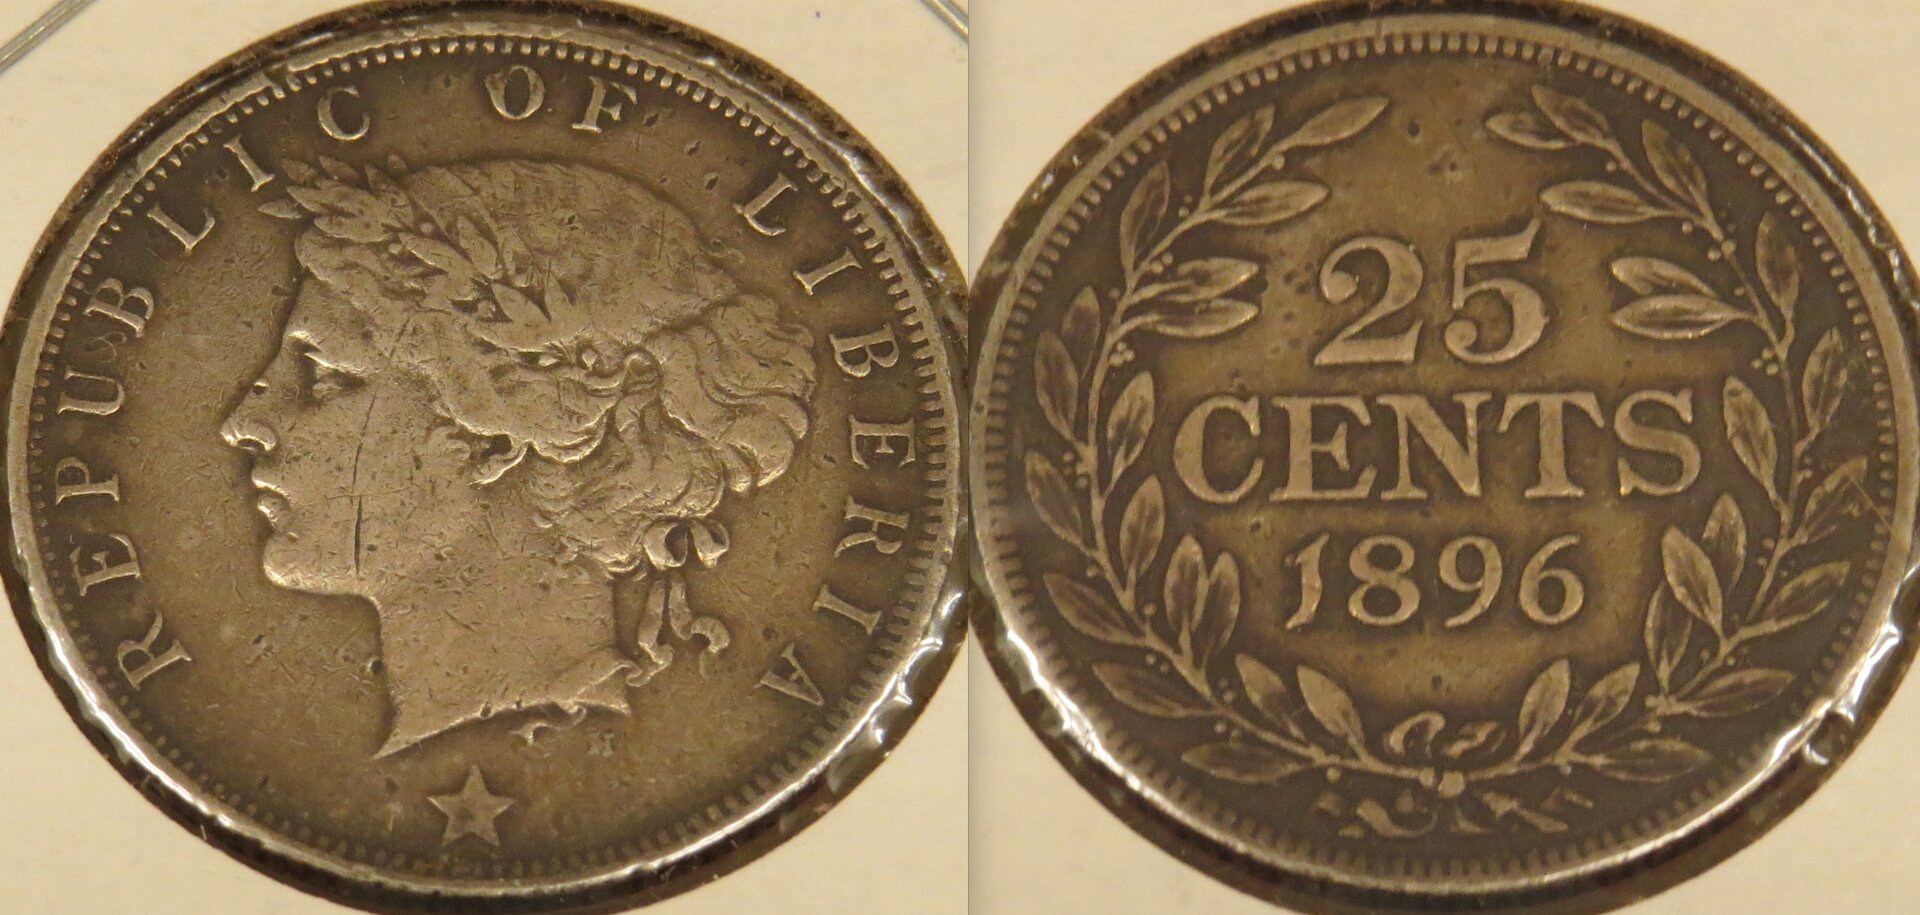 Liberia 25 cents 1896.jpeg